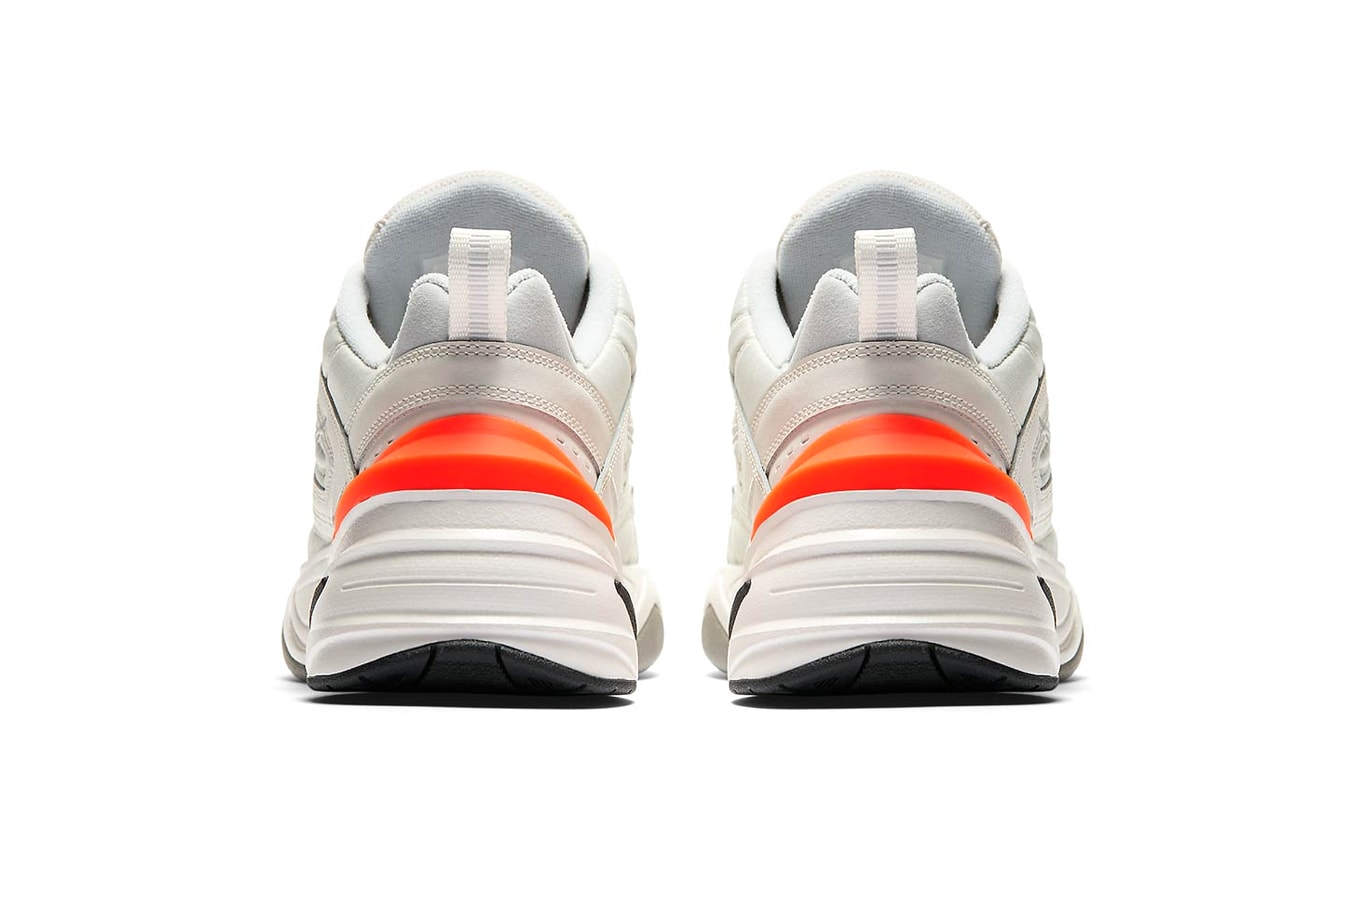 The Nike M2K Tekno Phantom colorway dad shoe